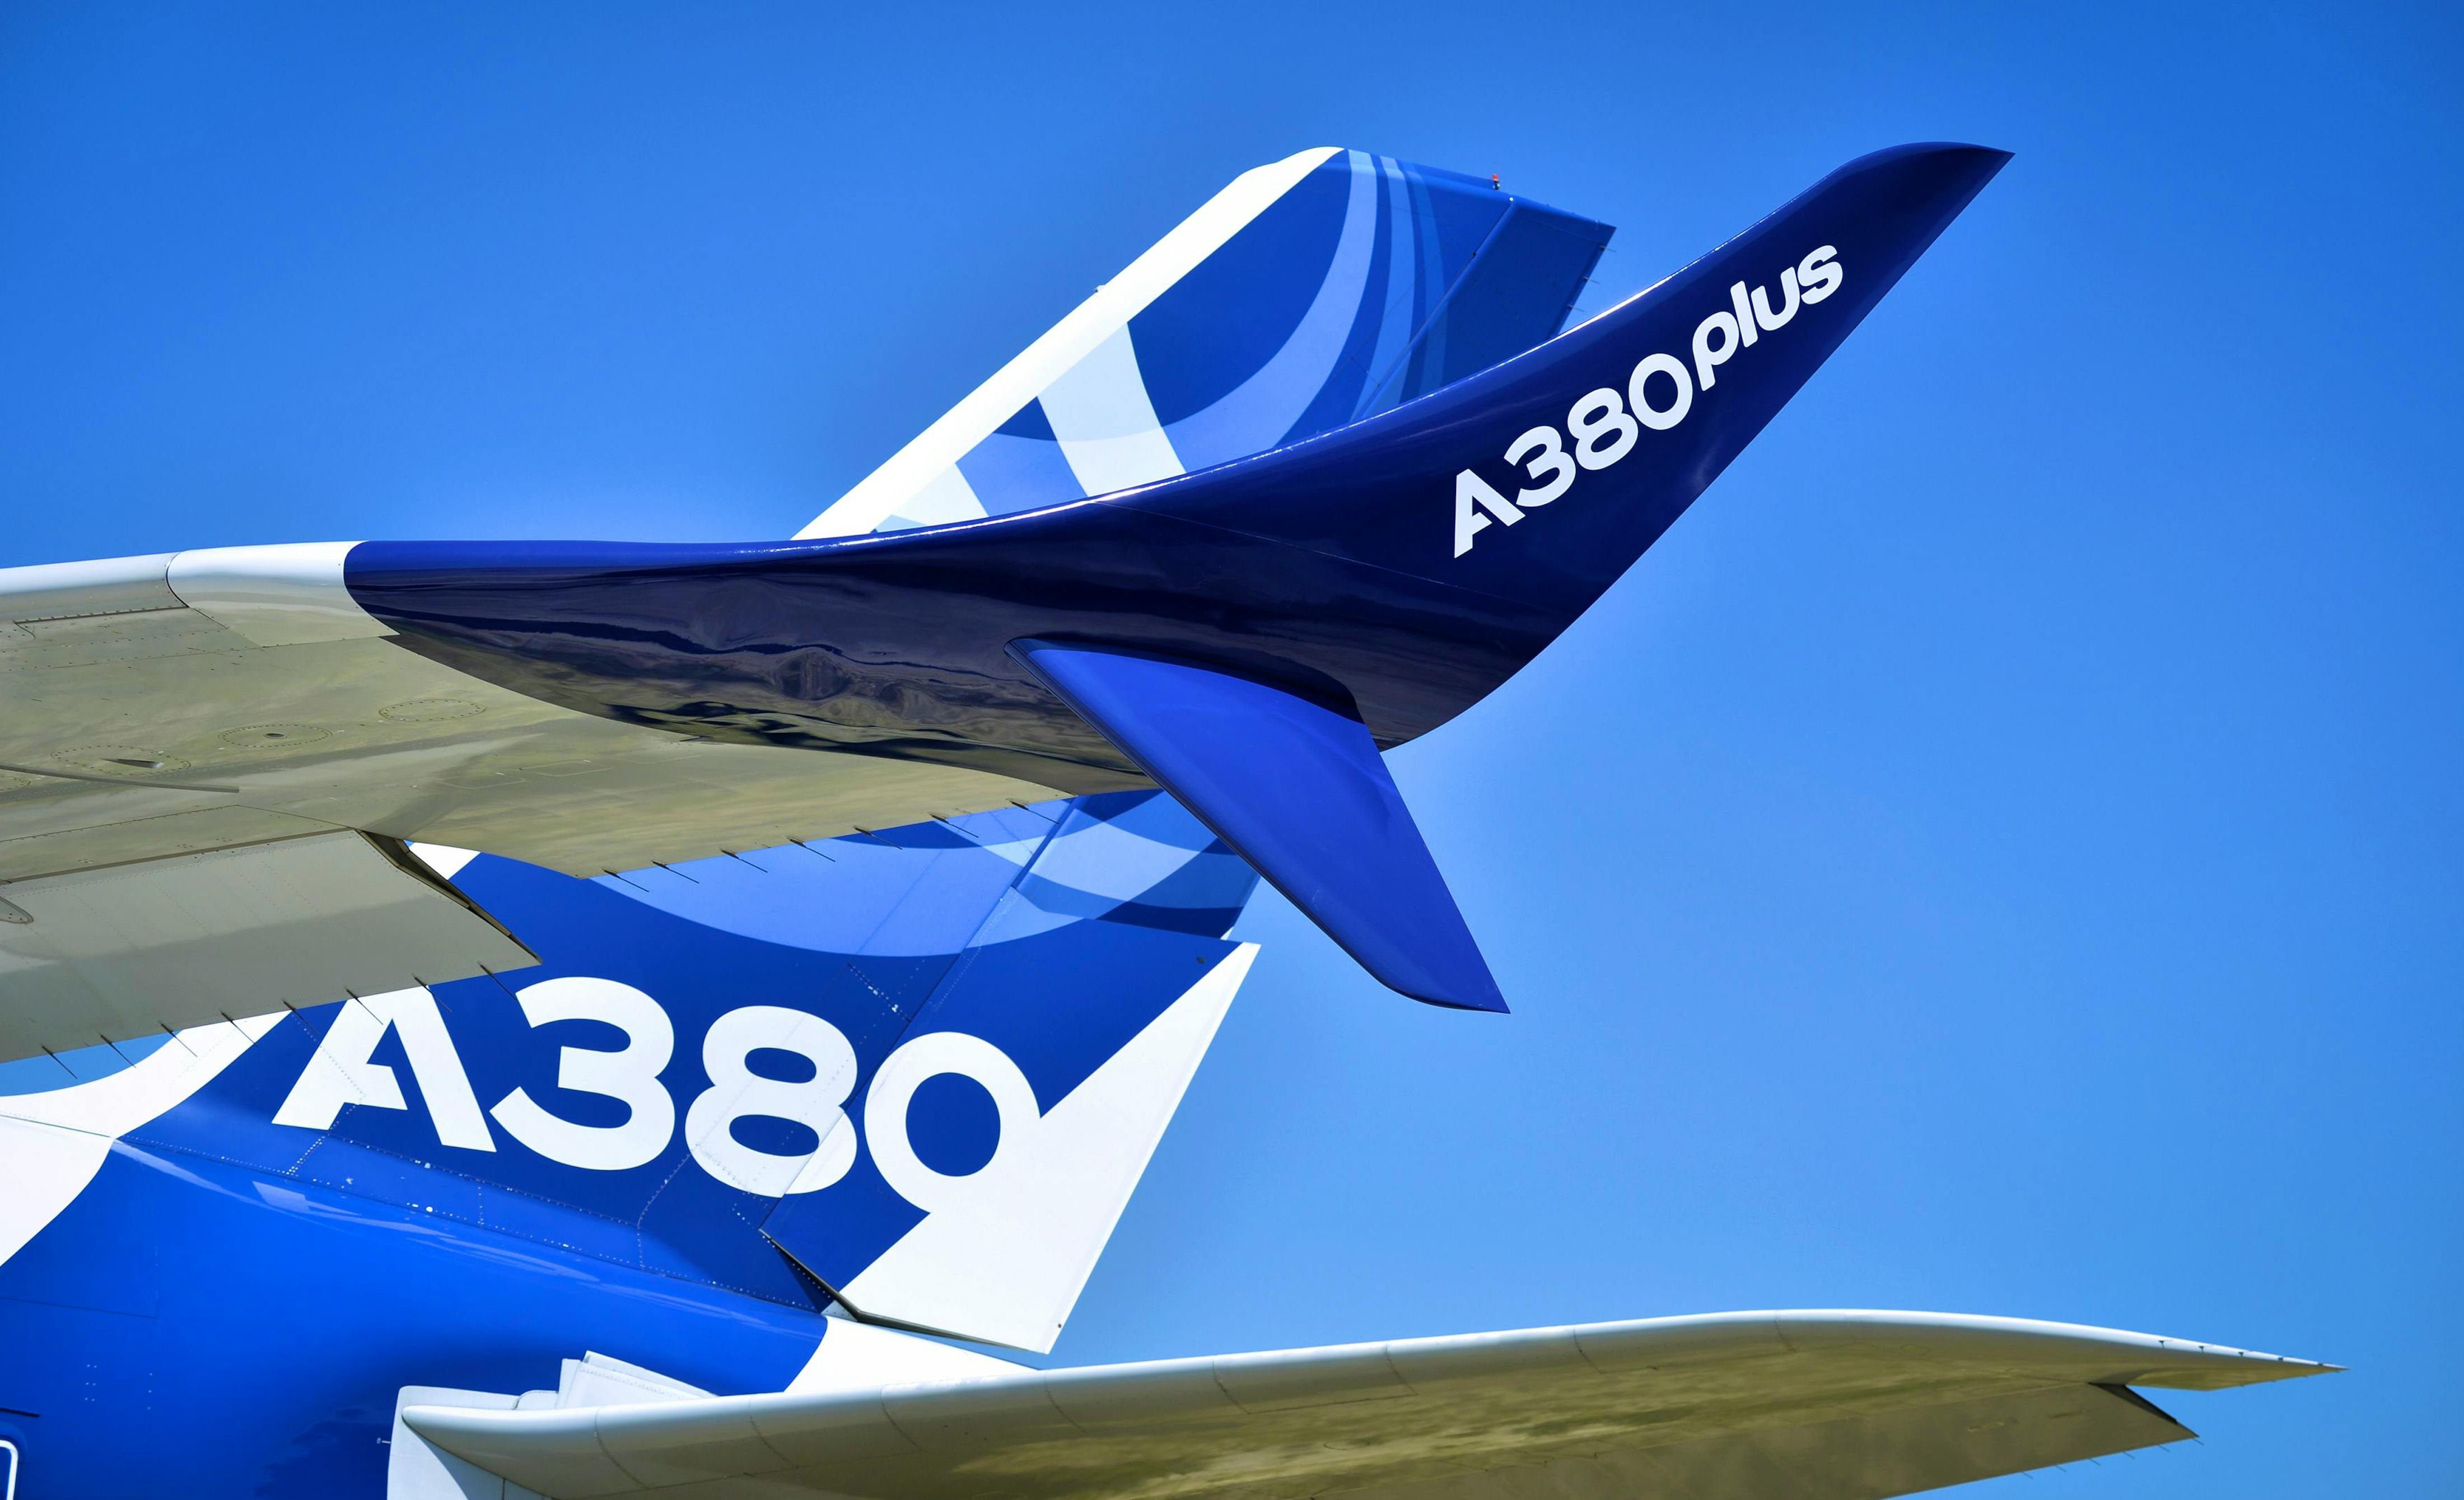 Airbus A380 Plus Winglets  ?auto=compress%2Cenhance%2Cformat&ch=Save Data&dpr=4&fit=max&w=1100&s=9f6d59e89d00ad6a5a62e9454b2adffc